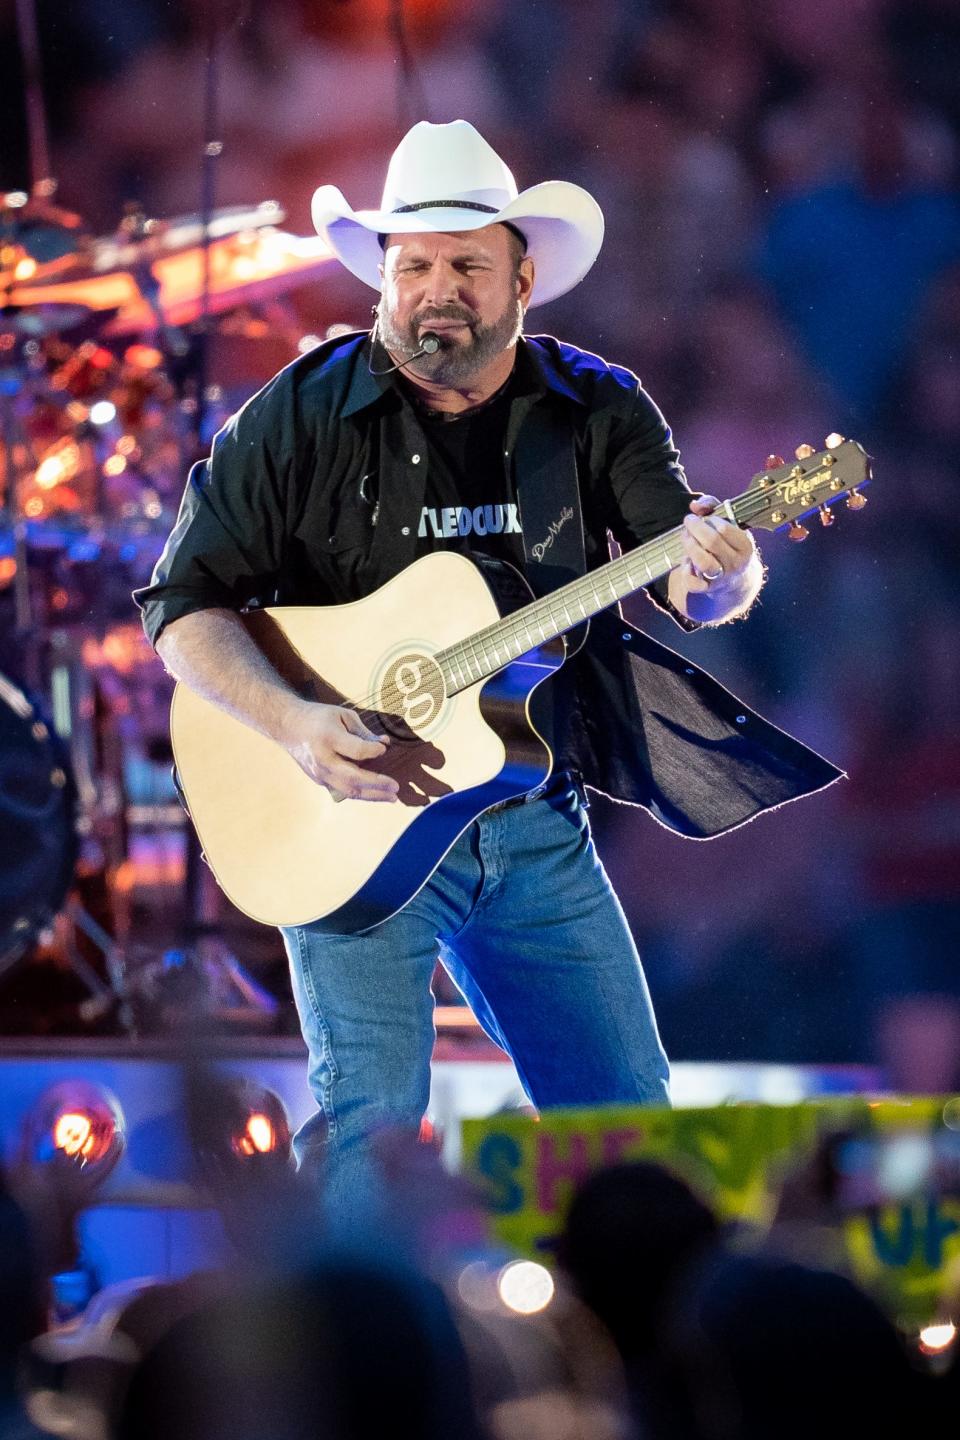 Garth Brooks performs during his Stadium Tour concert at Nissan Stadium in Nashville, Tenn., on April 15, 2022.